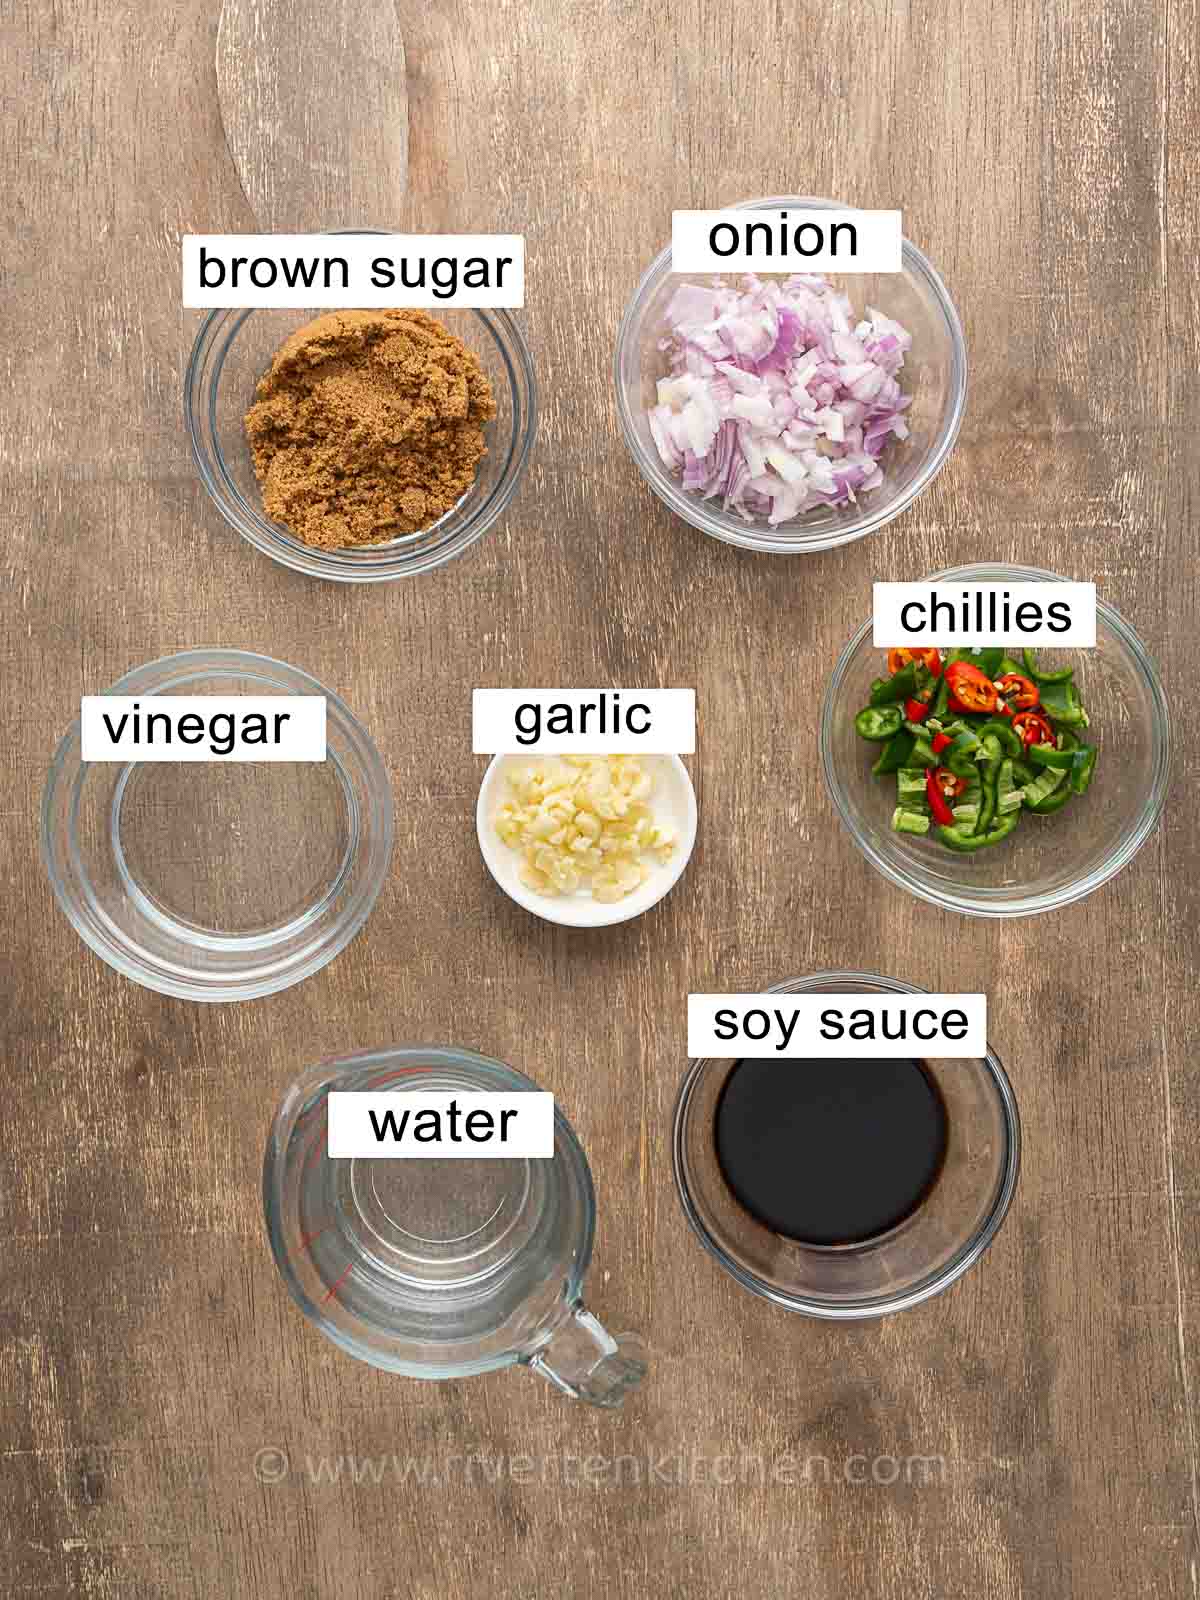 brown sugar, onion, garlic, soy sauce, vinegar, chillies, water